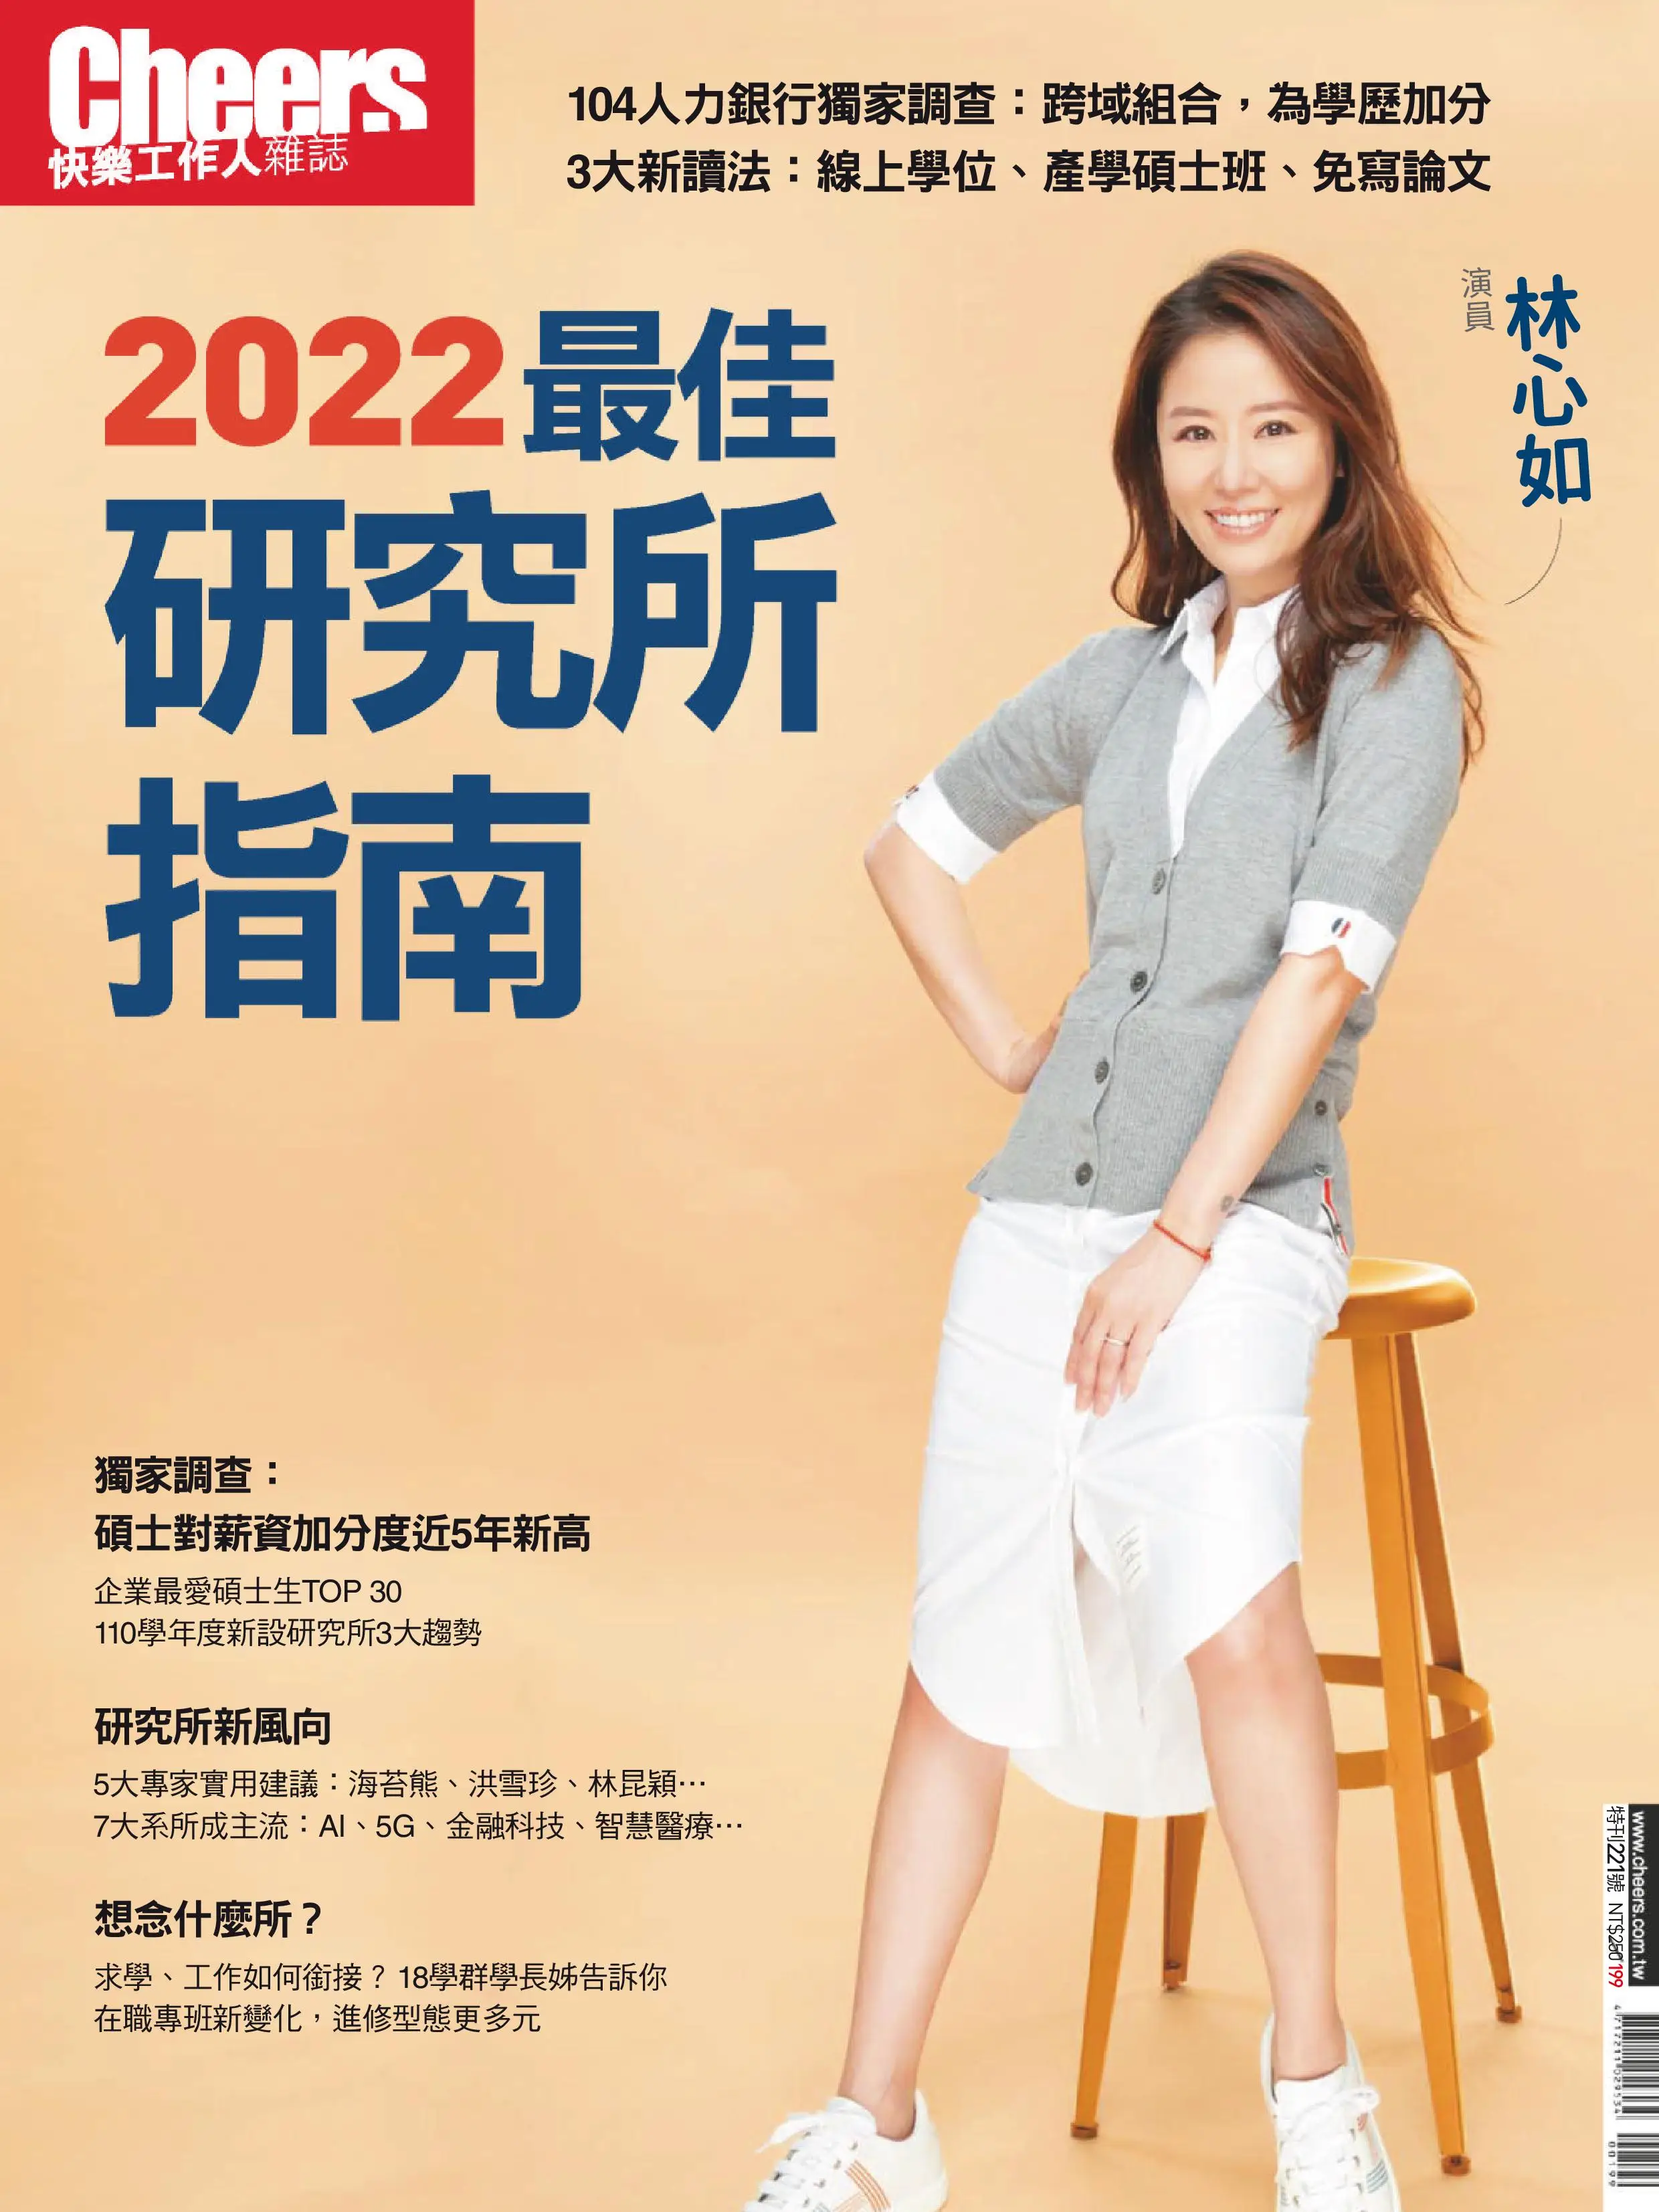 Cheers Special issue 快樂工作人特刊 – 九月 06, 2021